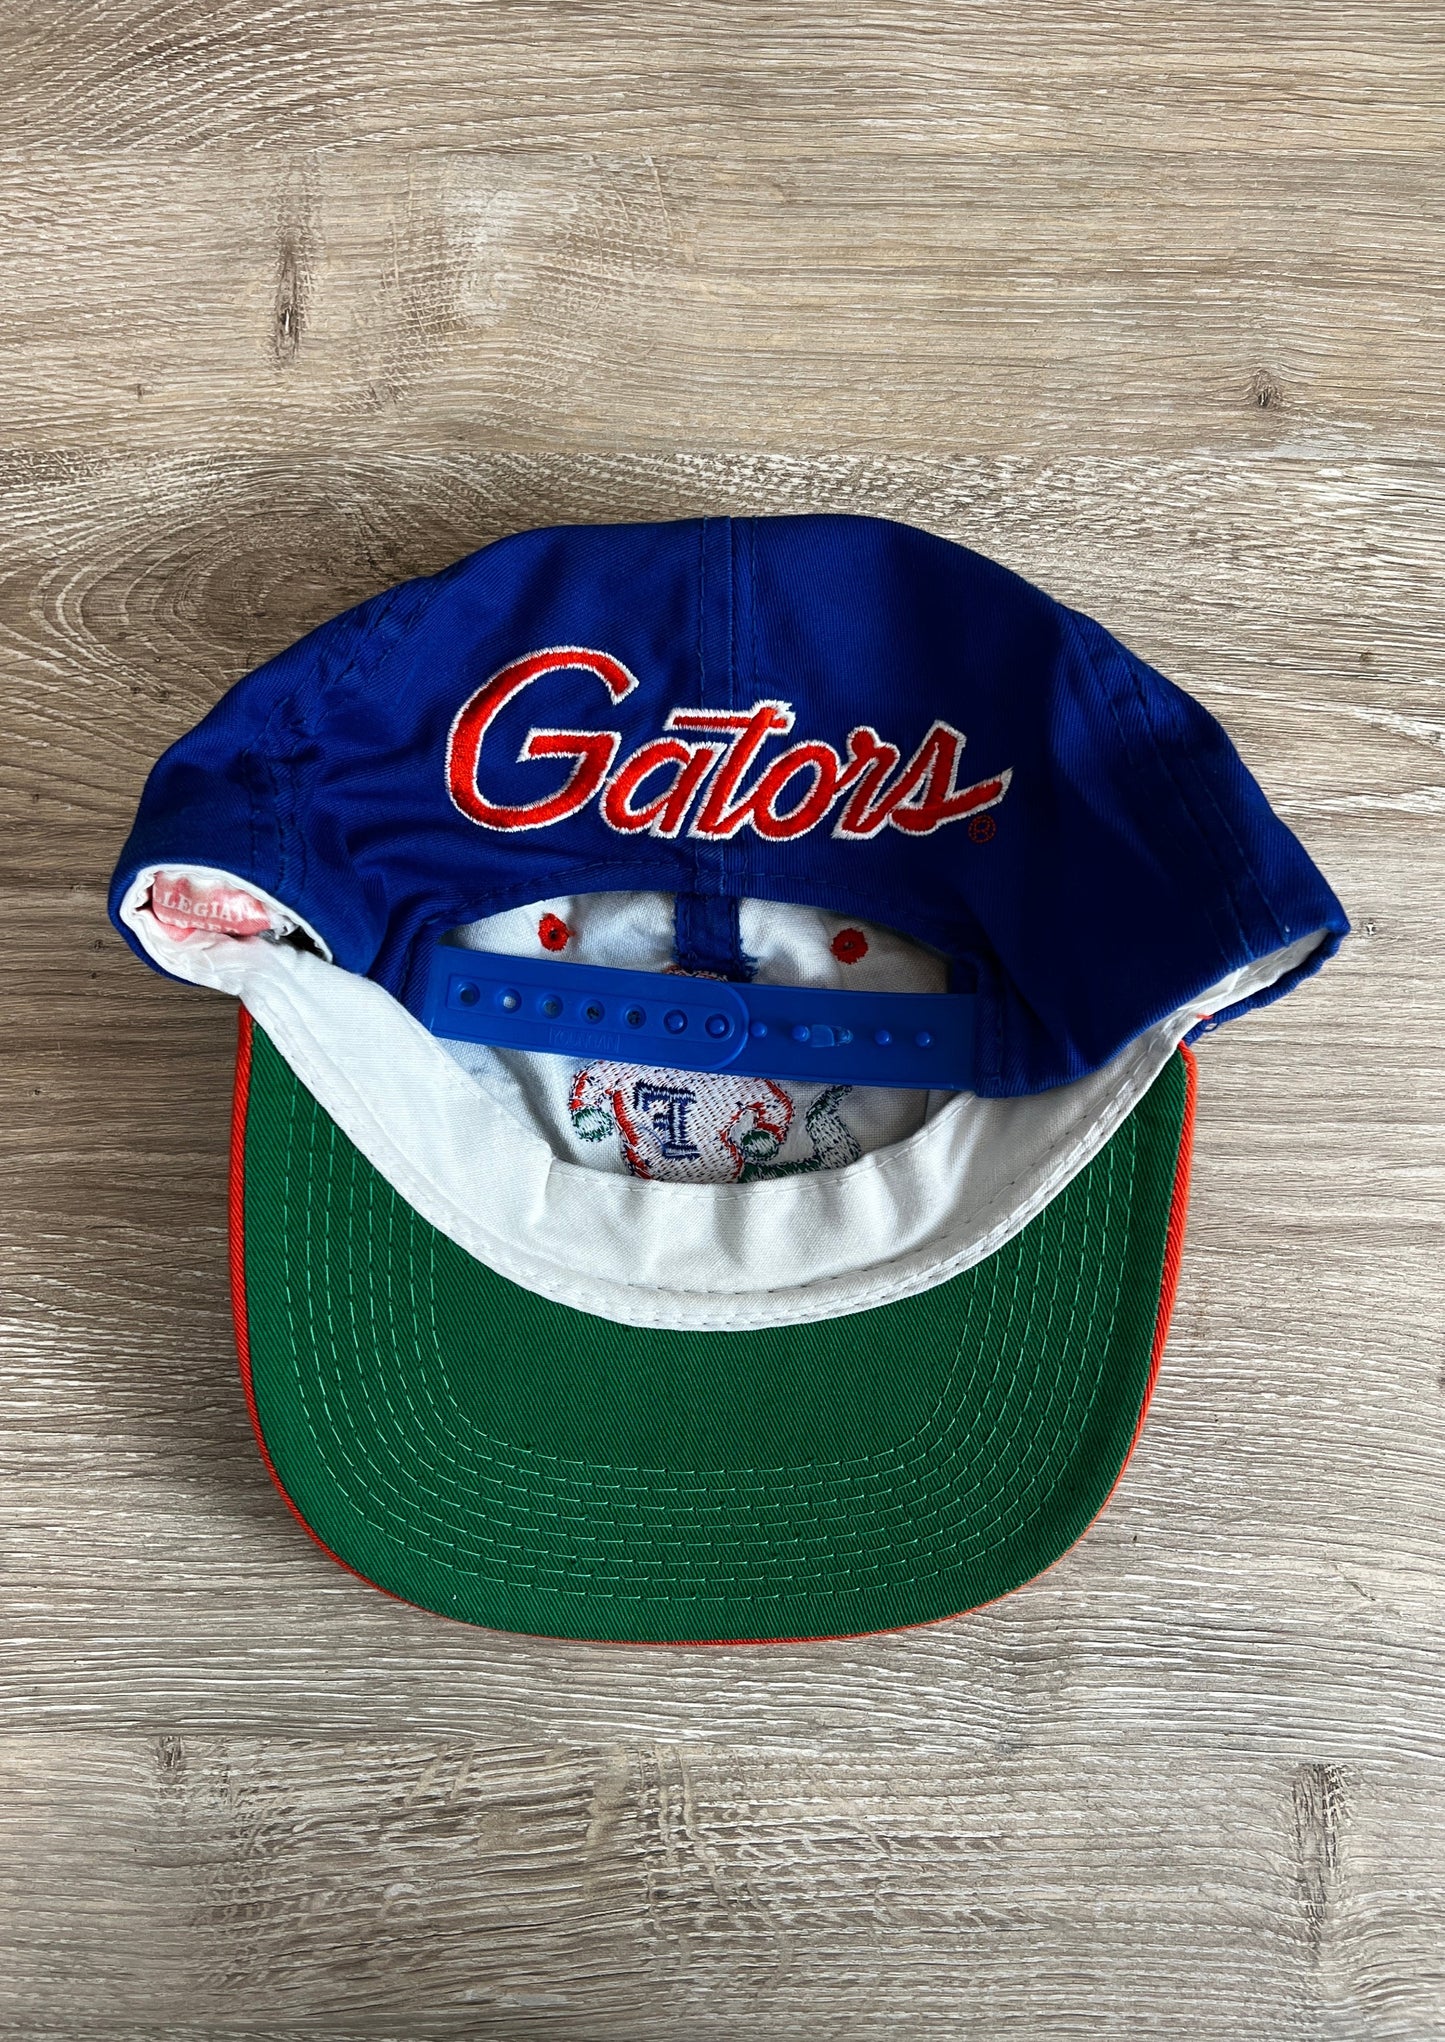 Florida Gators Hat